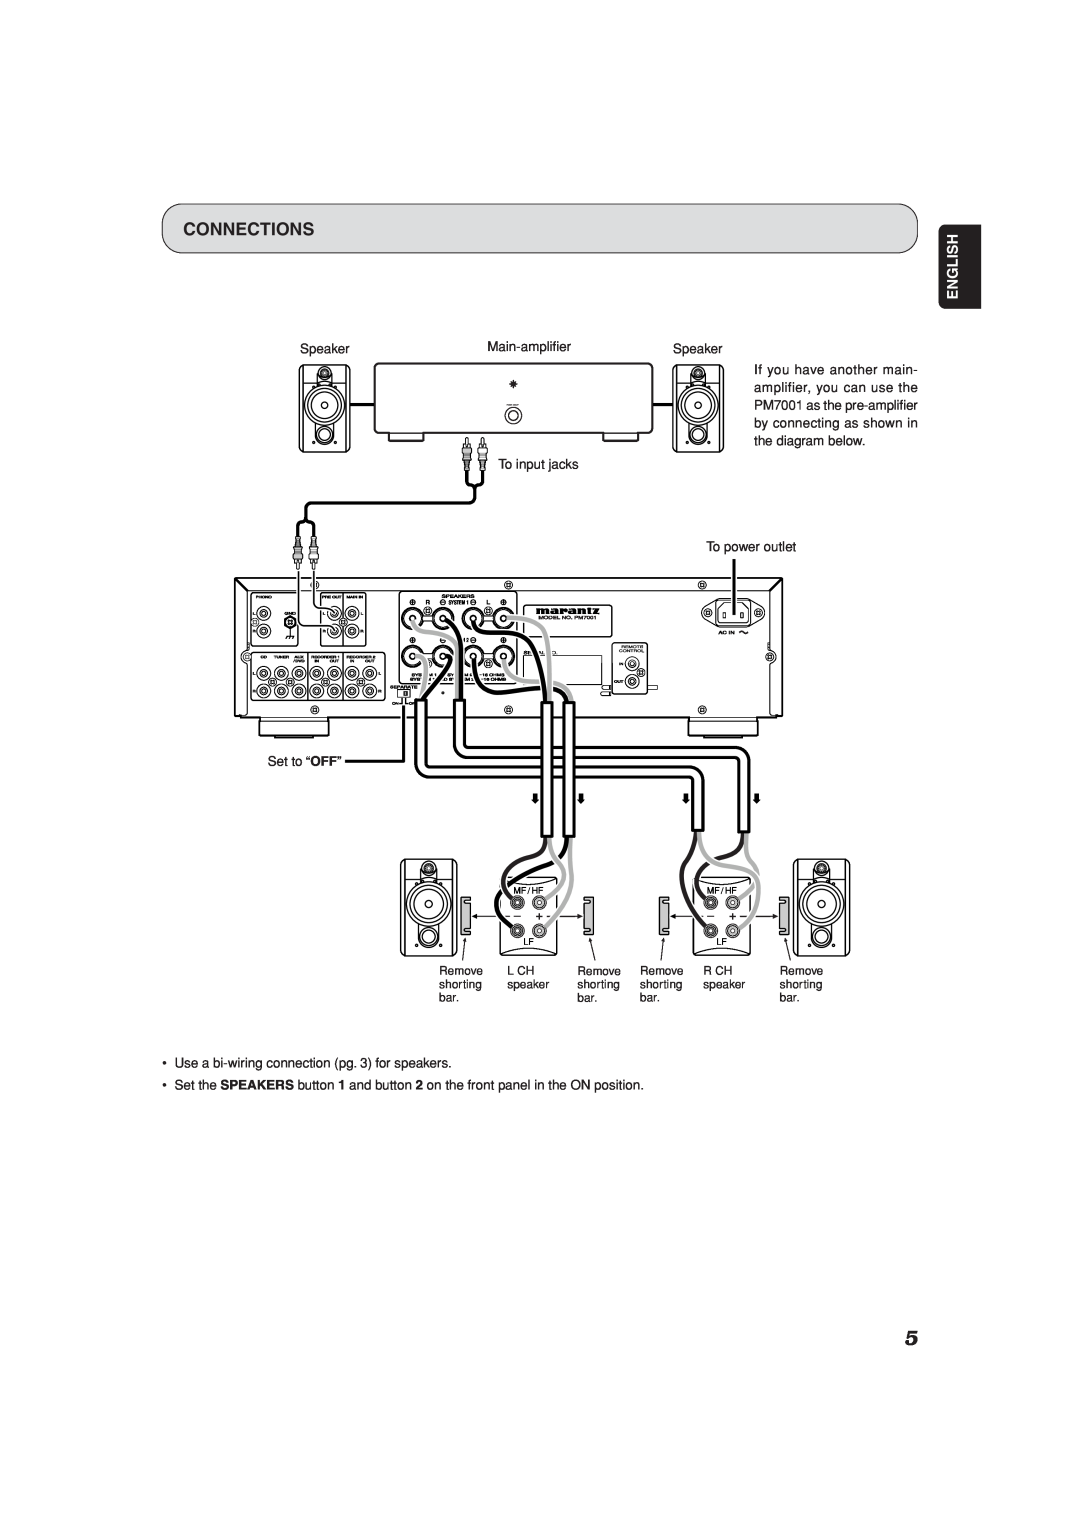 Marantz PM7001KI manual Connections, English, Speaker, Main-amplifier, To input jacks, To power outlet, Set to “OFF” 